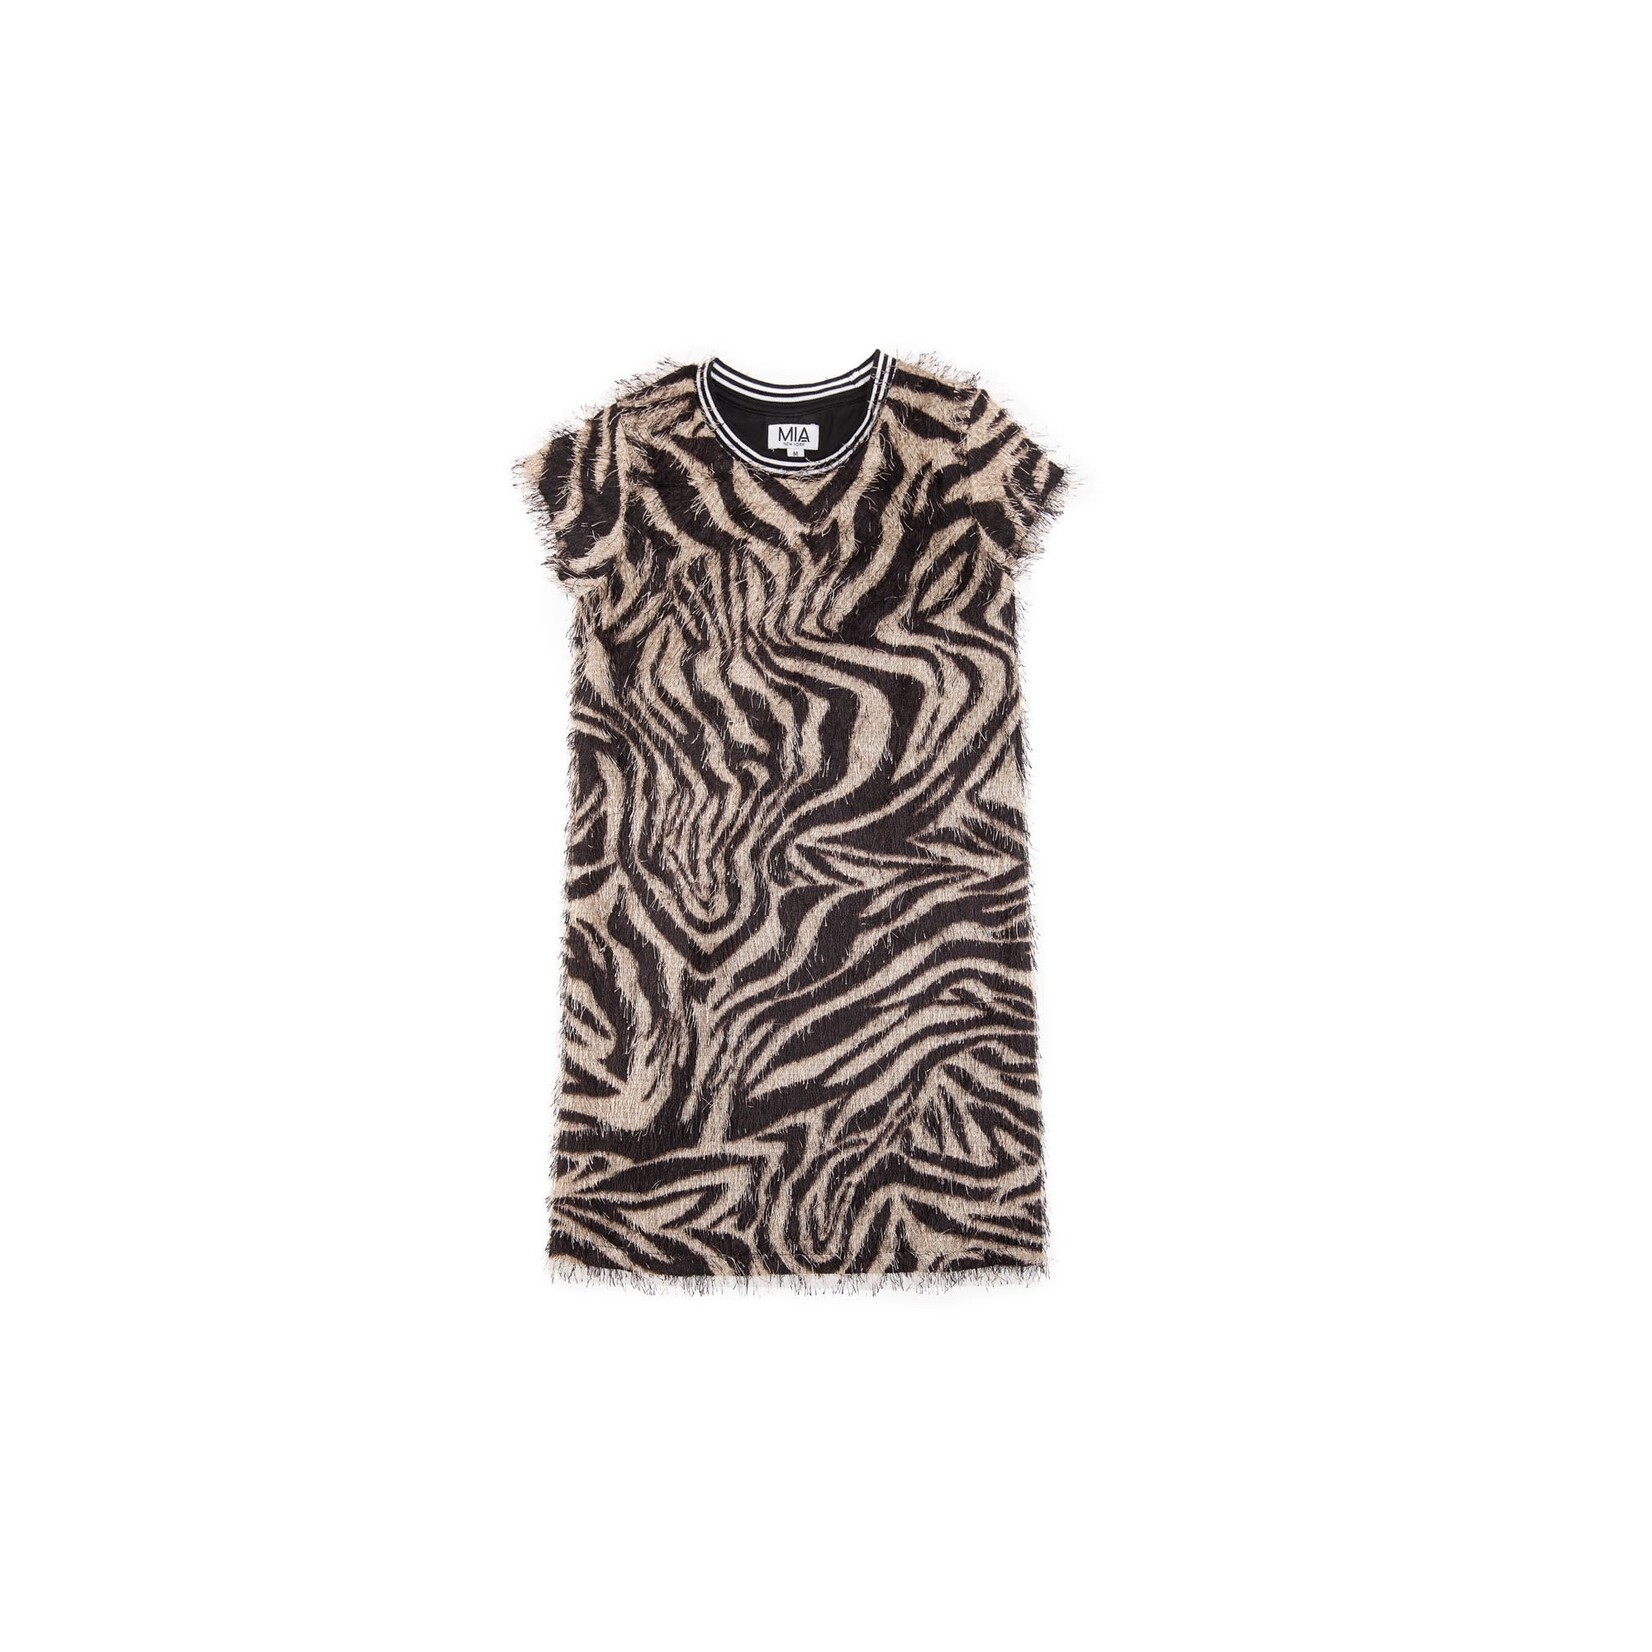 Mia New York Leopard Fringe Dress